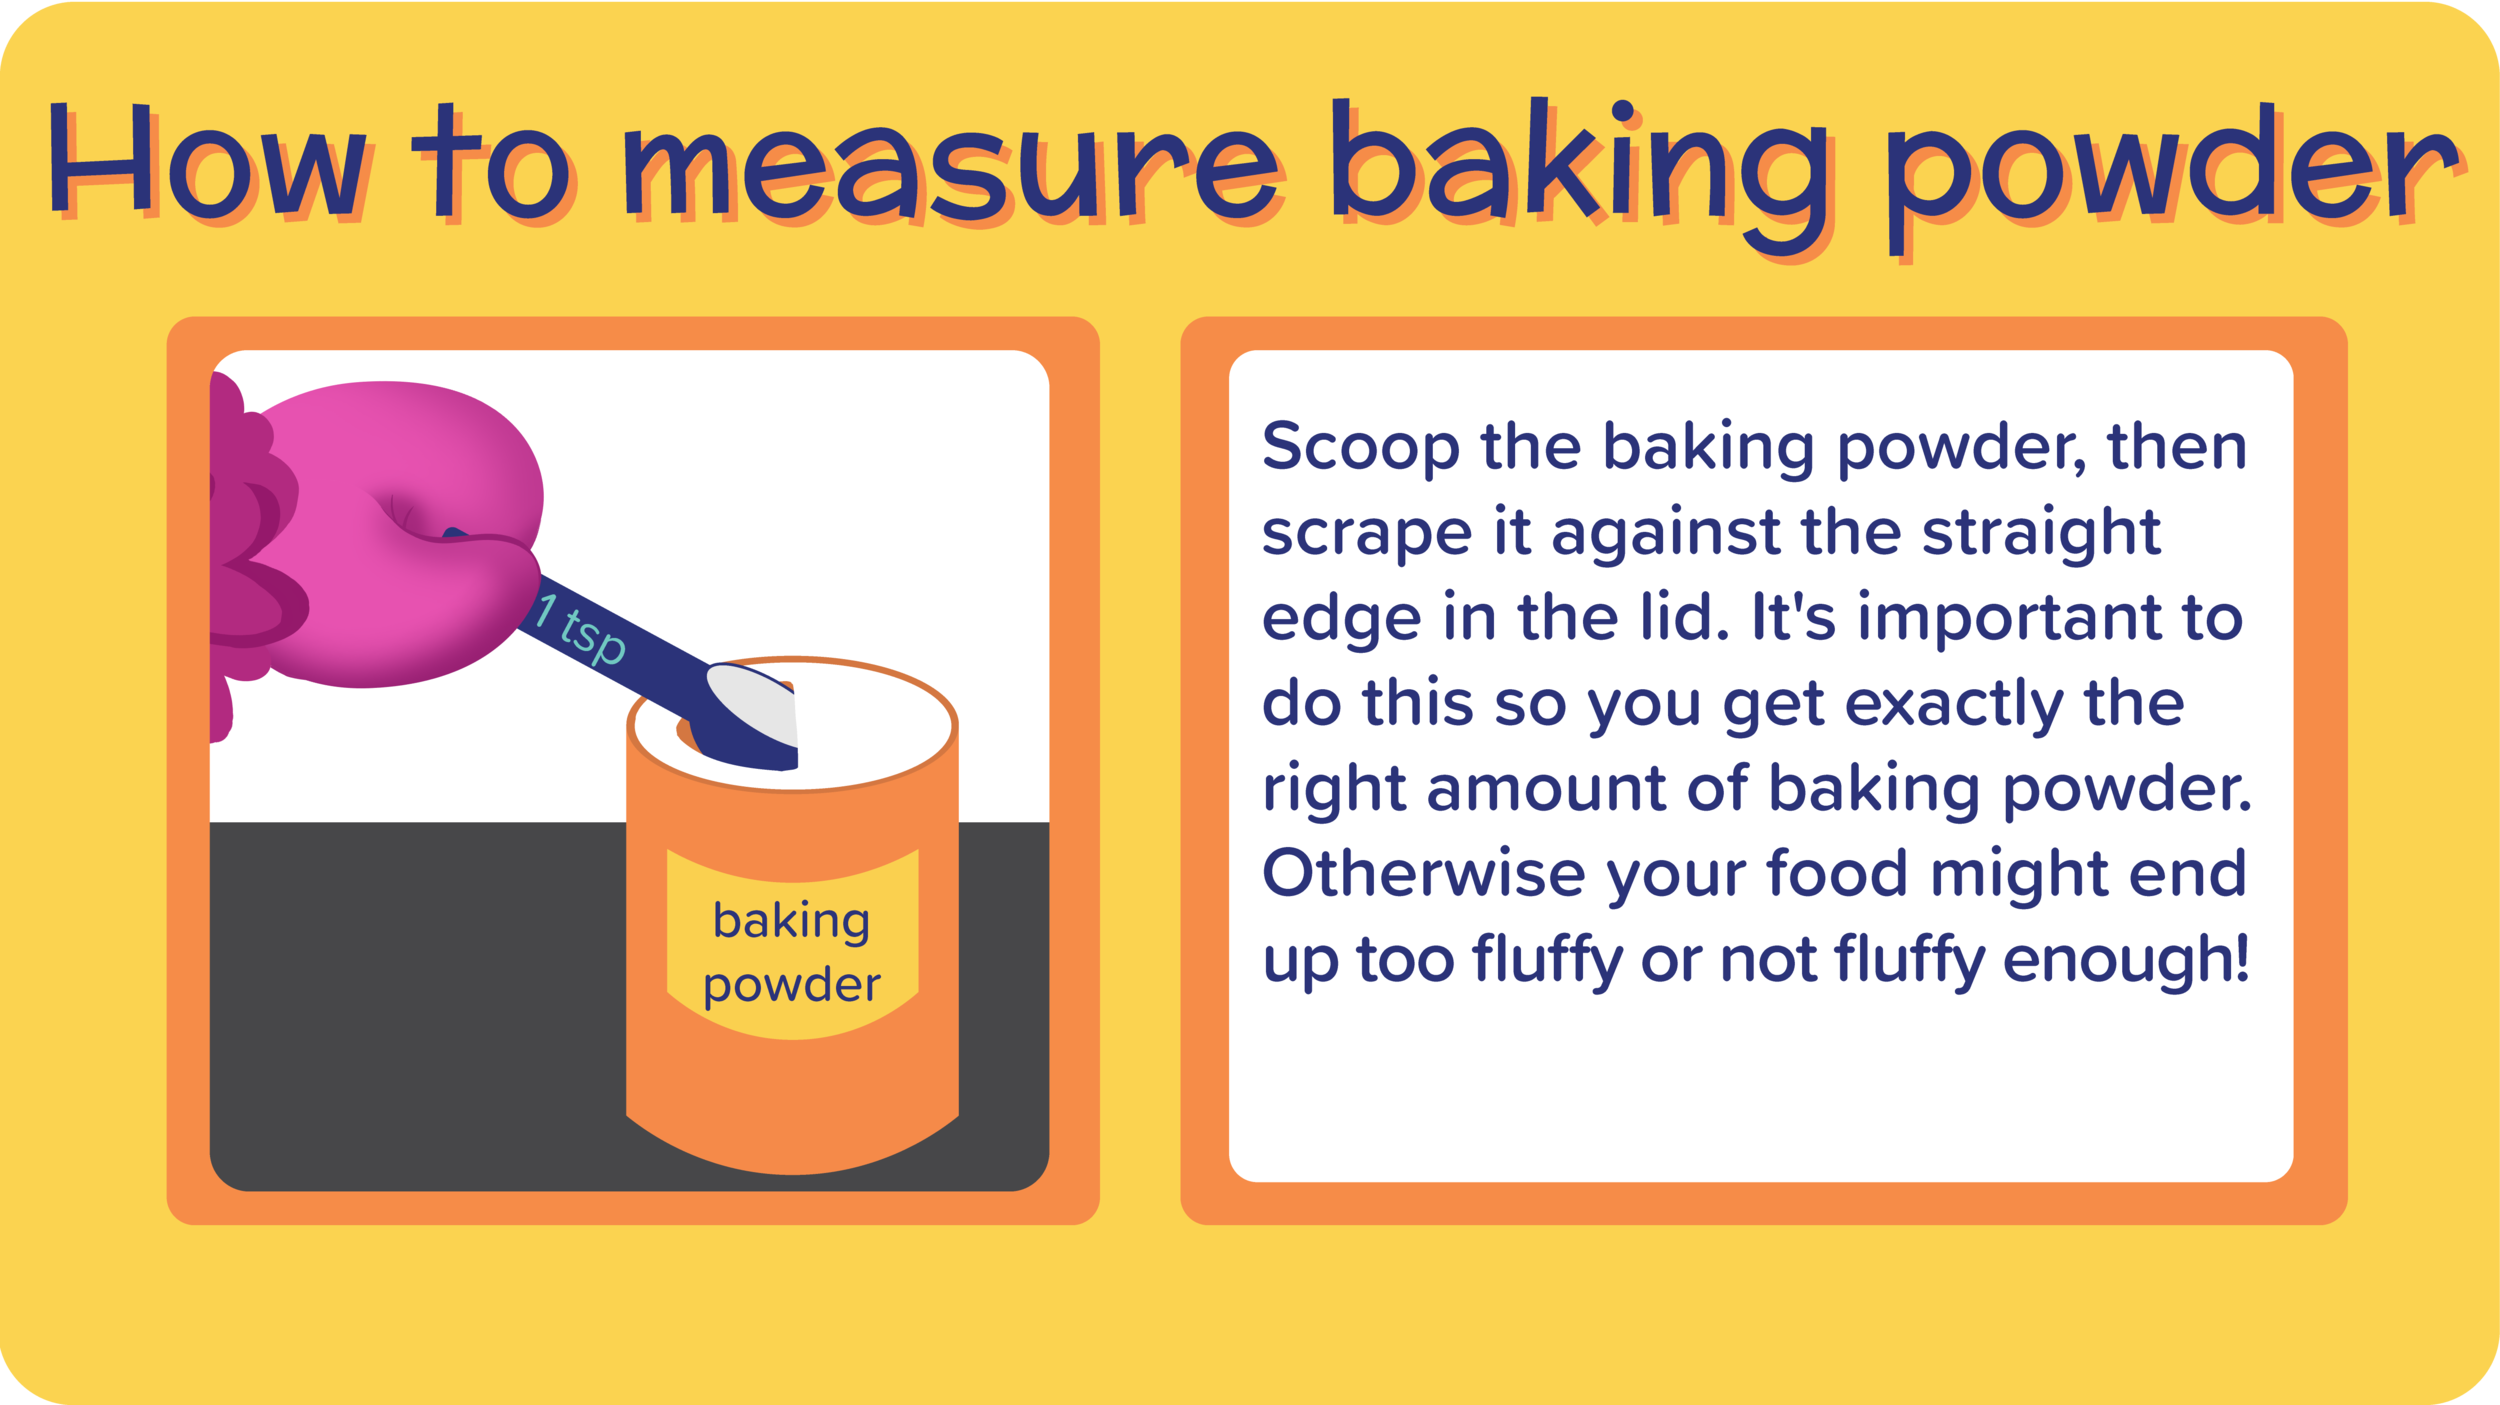 12_ChocolateChipZucchiniBananaBread_How to measure baking powder-01.png